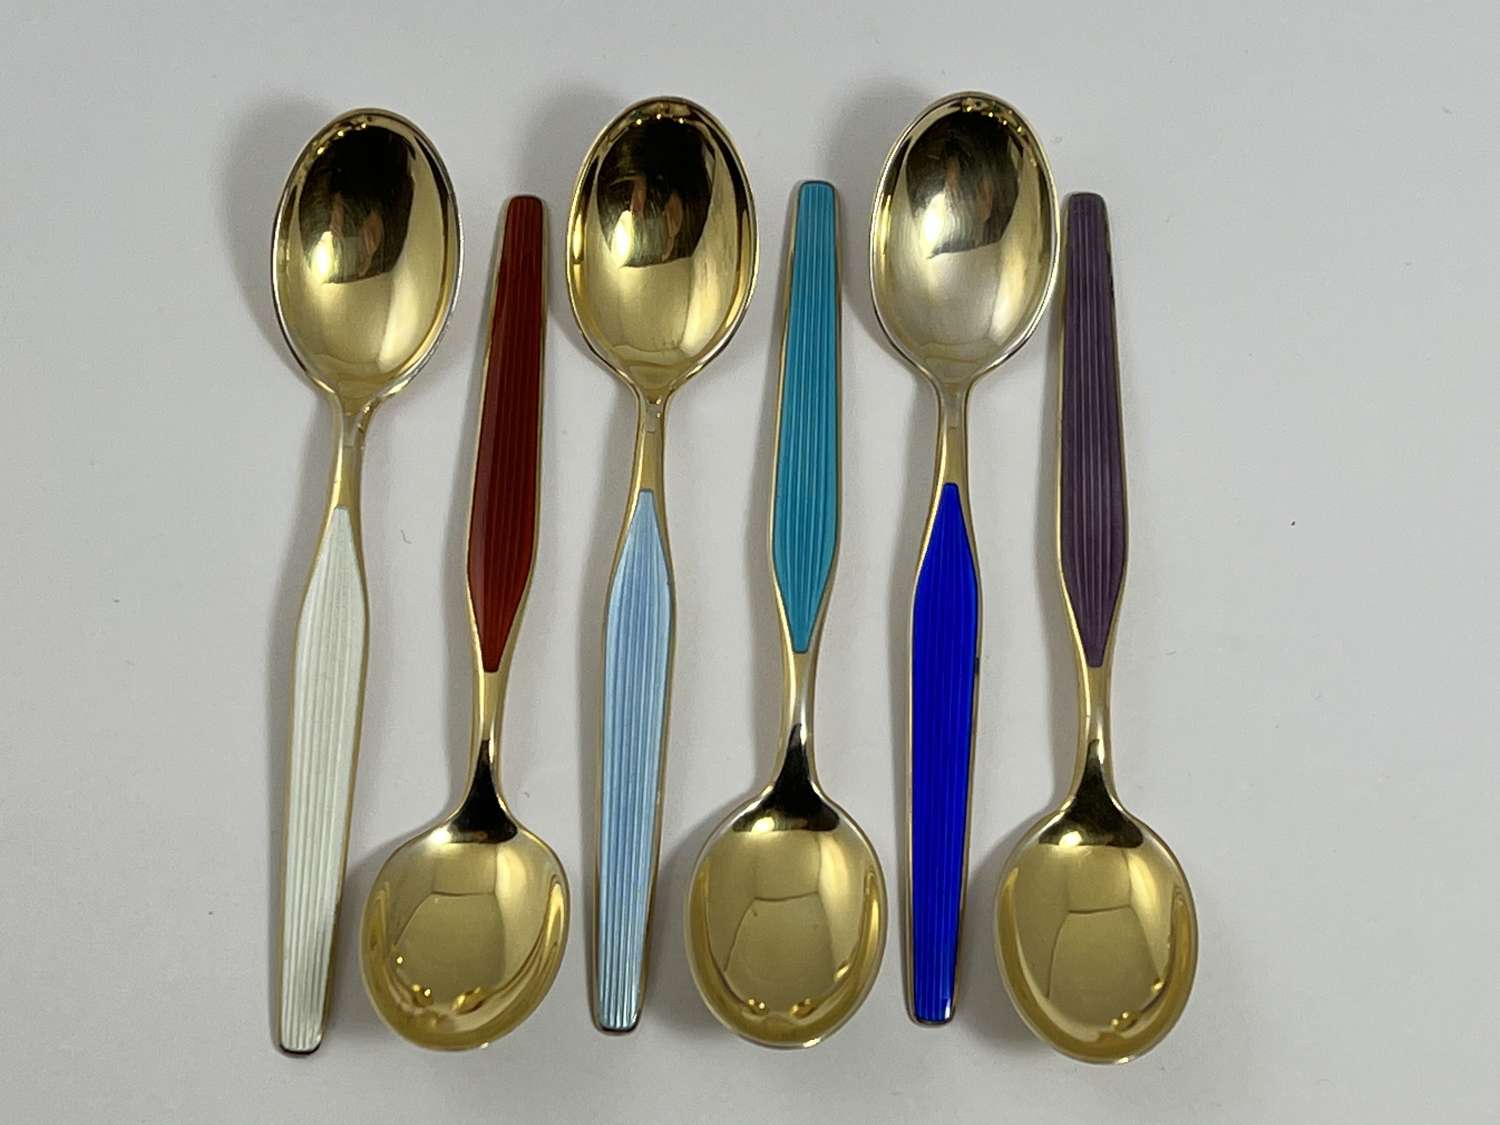 Norwegian silver gilt and enamel spoons,c 1970